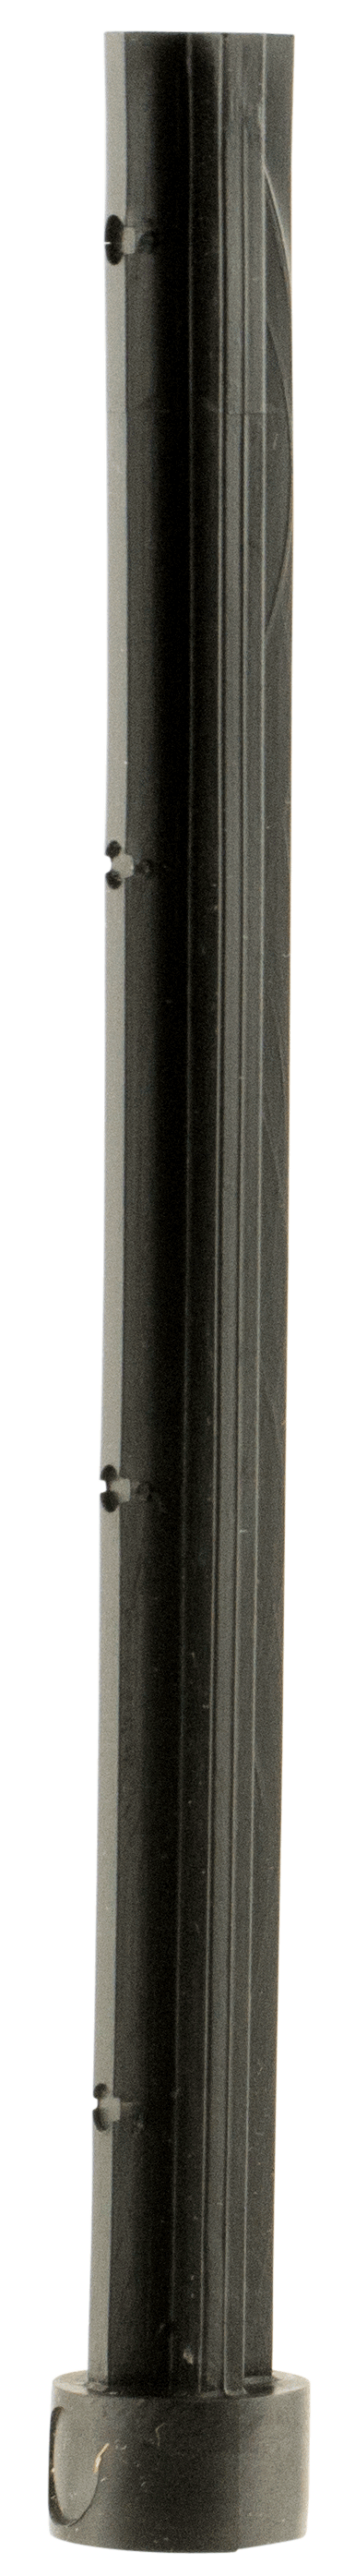 Butler Creek 50001 Shotgun Plug made of Plastic with Black Finish for 12 16 or 20 Gauge Pump & Semi-Auto Shotguns (Cut to Length)